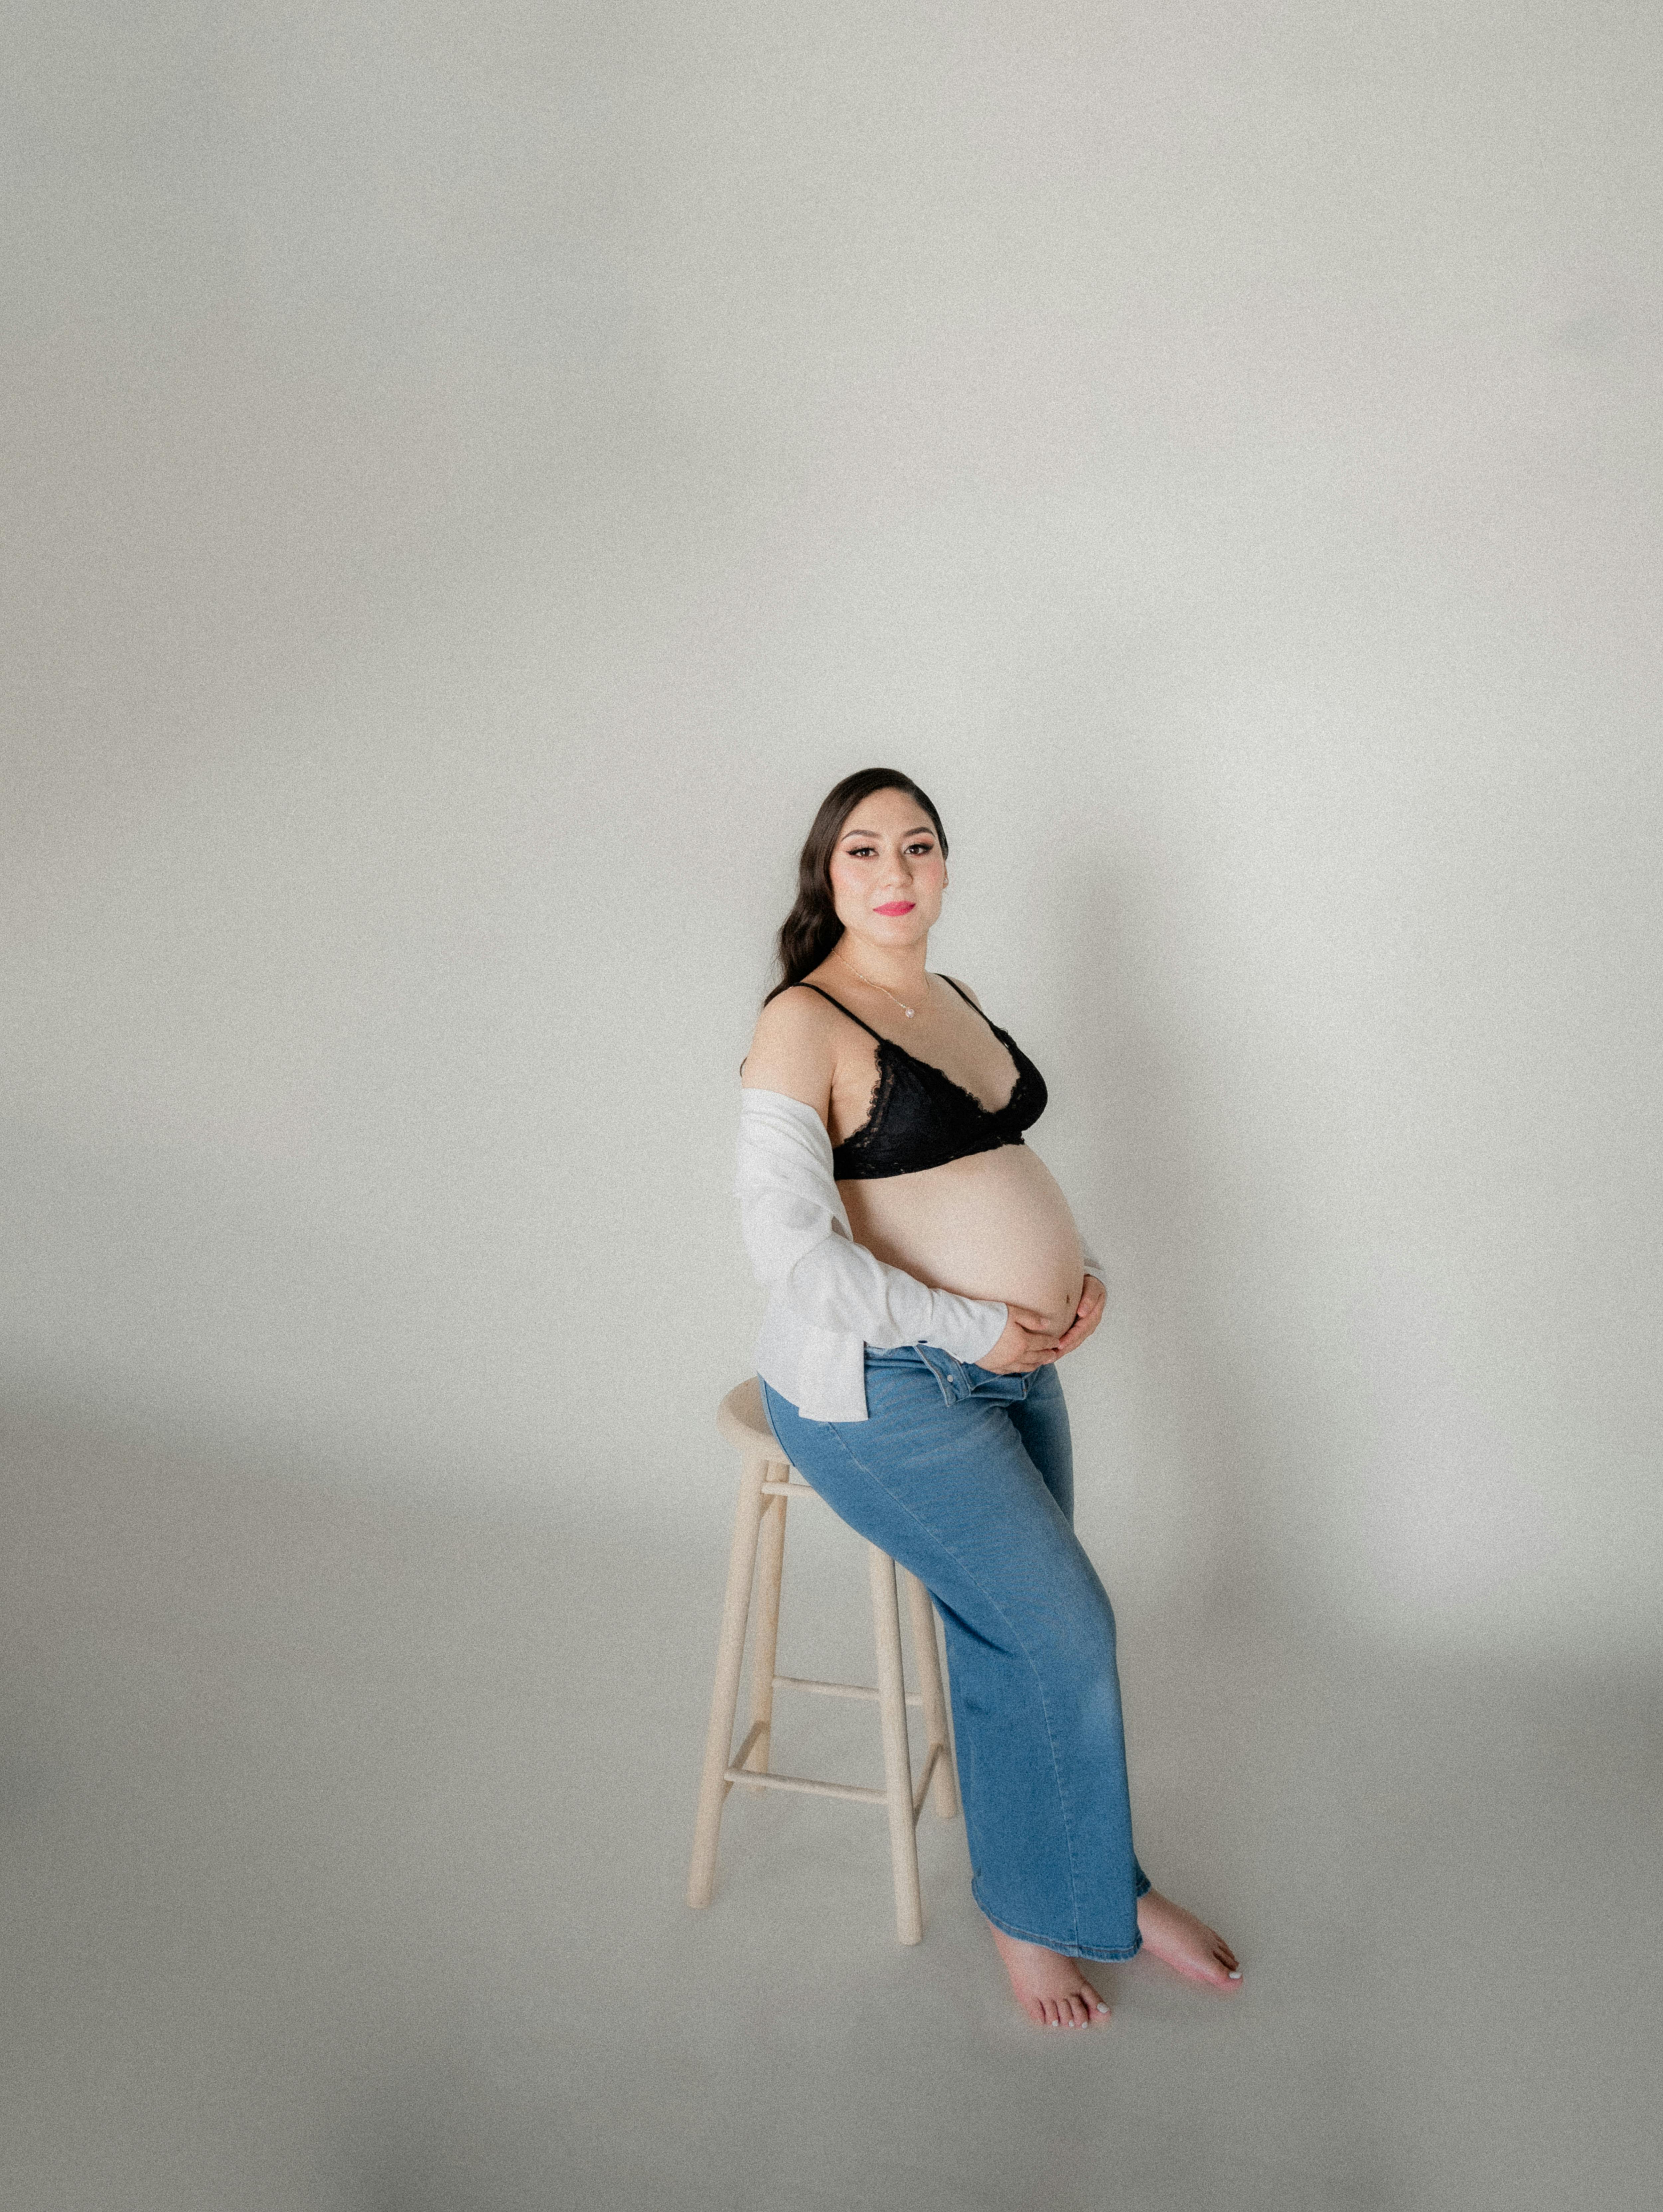 Studio Shot of a Pregnant Woman · Free Stock Photo